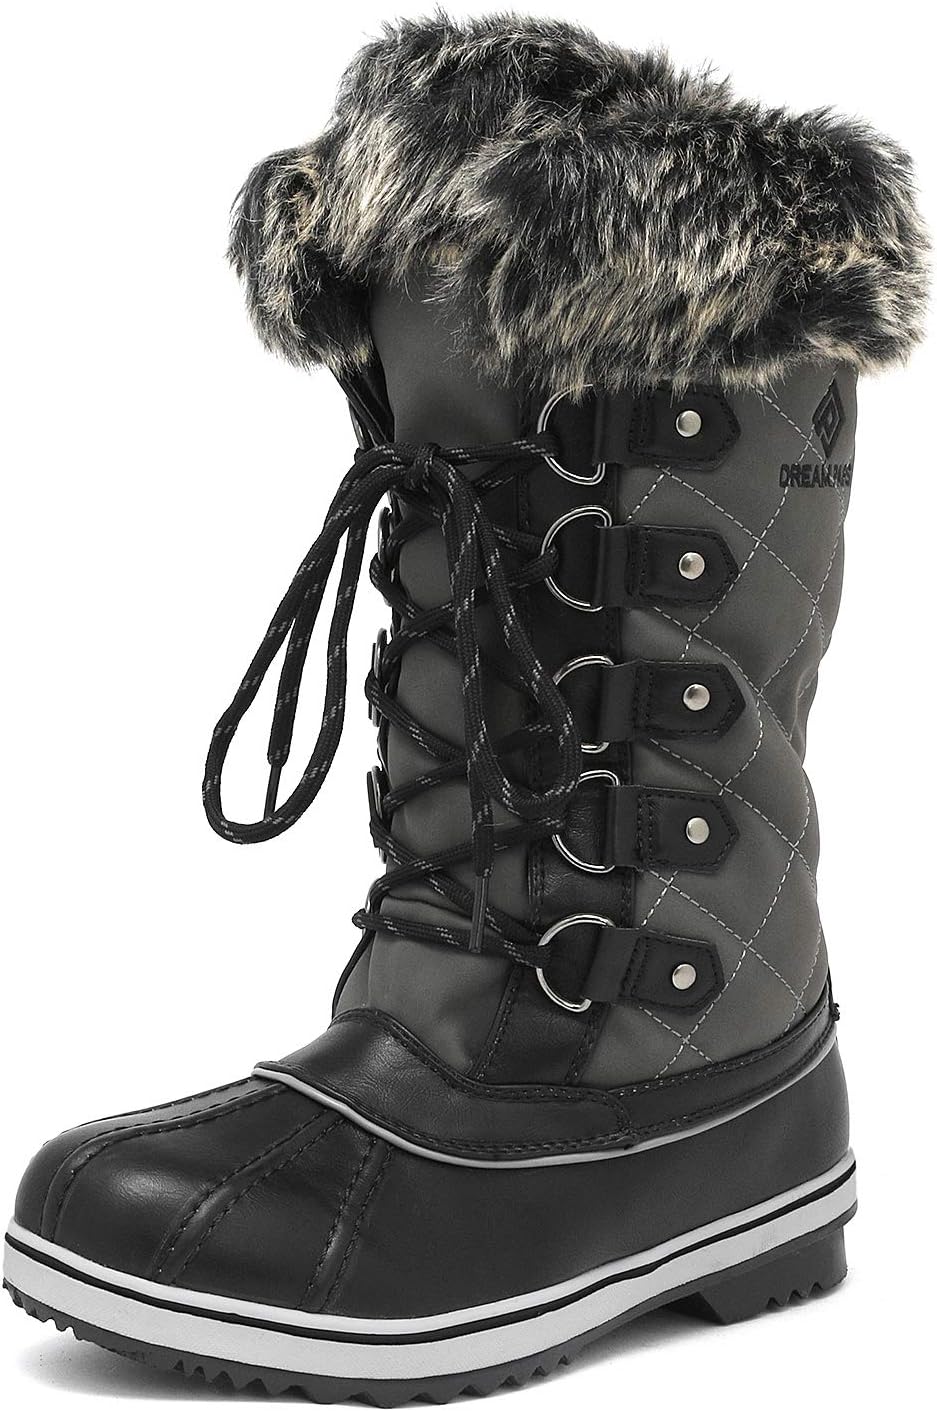 DREAM PAIRS Women' River_1 Mid Calf Waterproof Winter Snow Boots